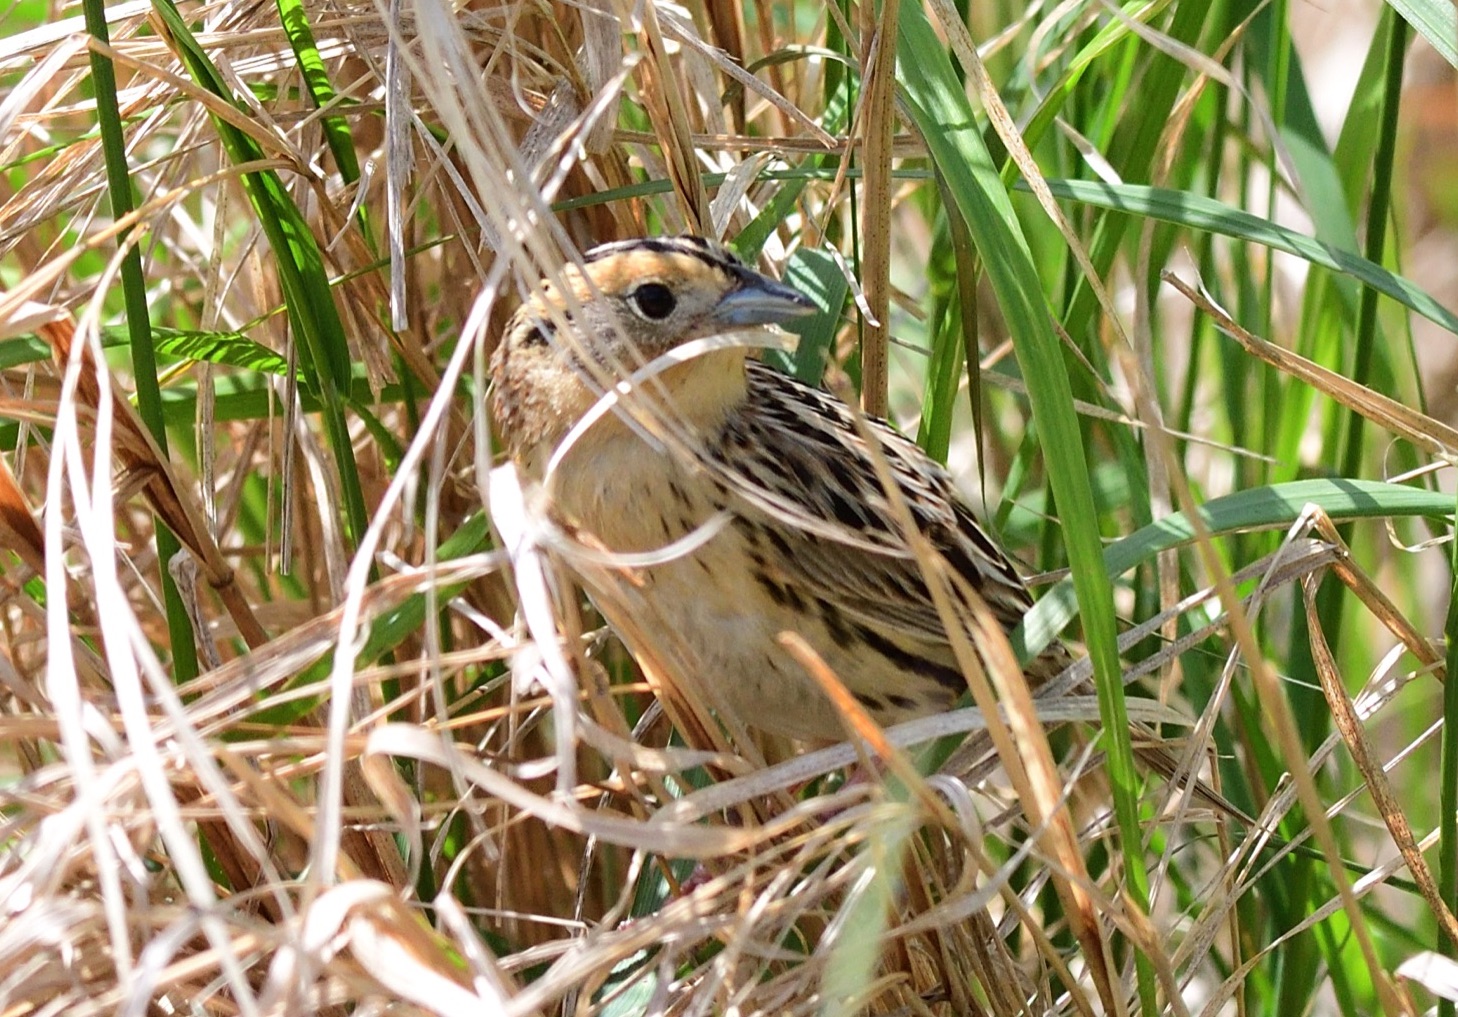 LeConte's Sparrow